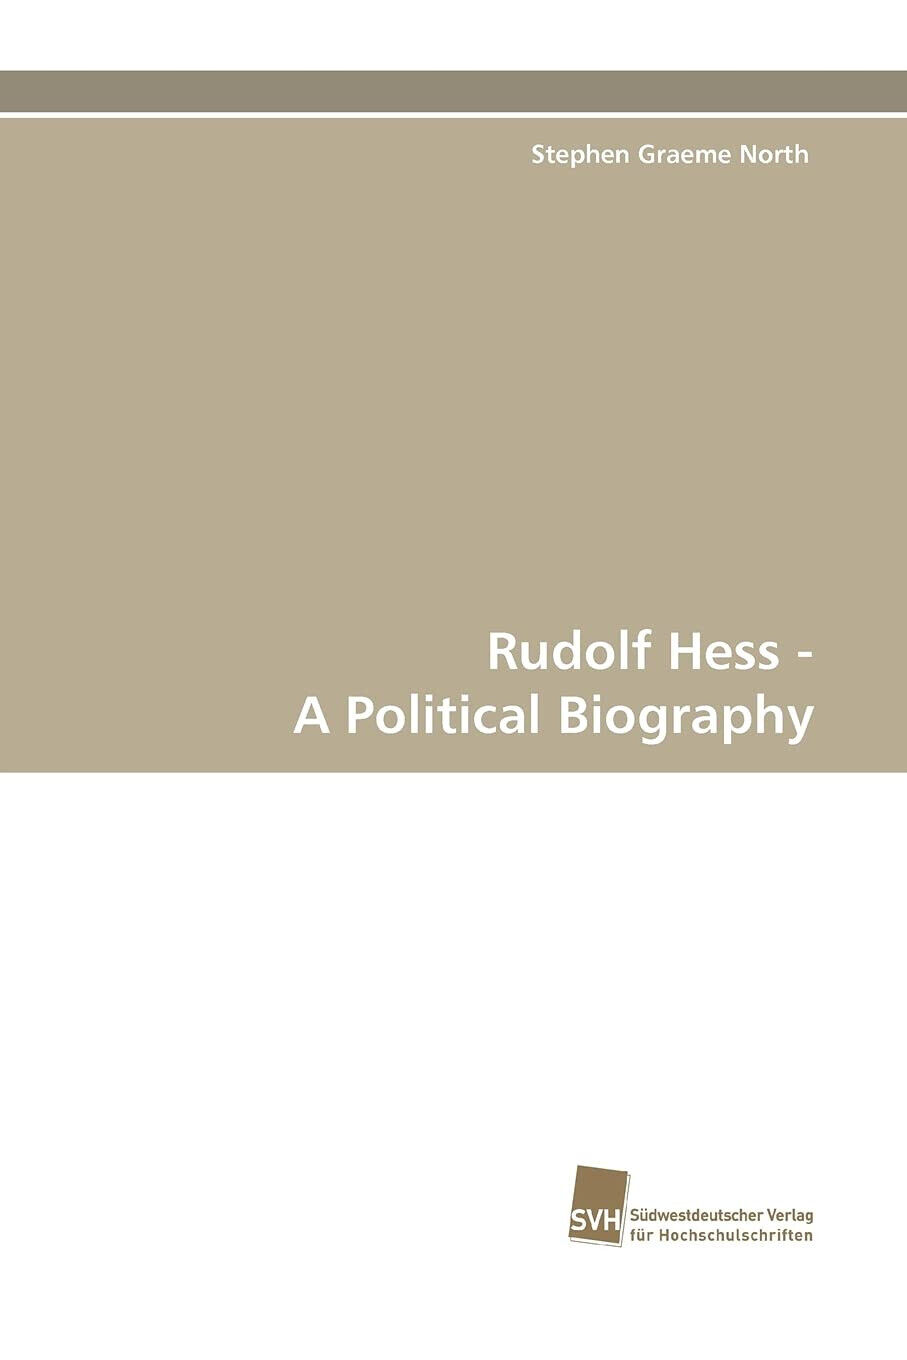 Rudolf Hess - A Political Biography - Stephen Graeme North - 2010